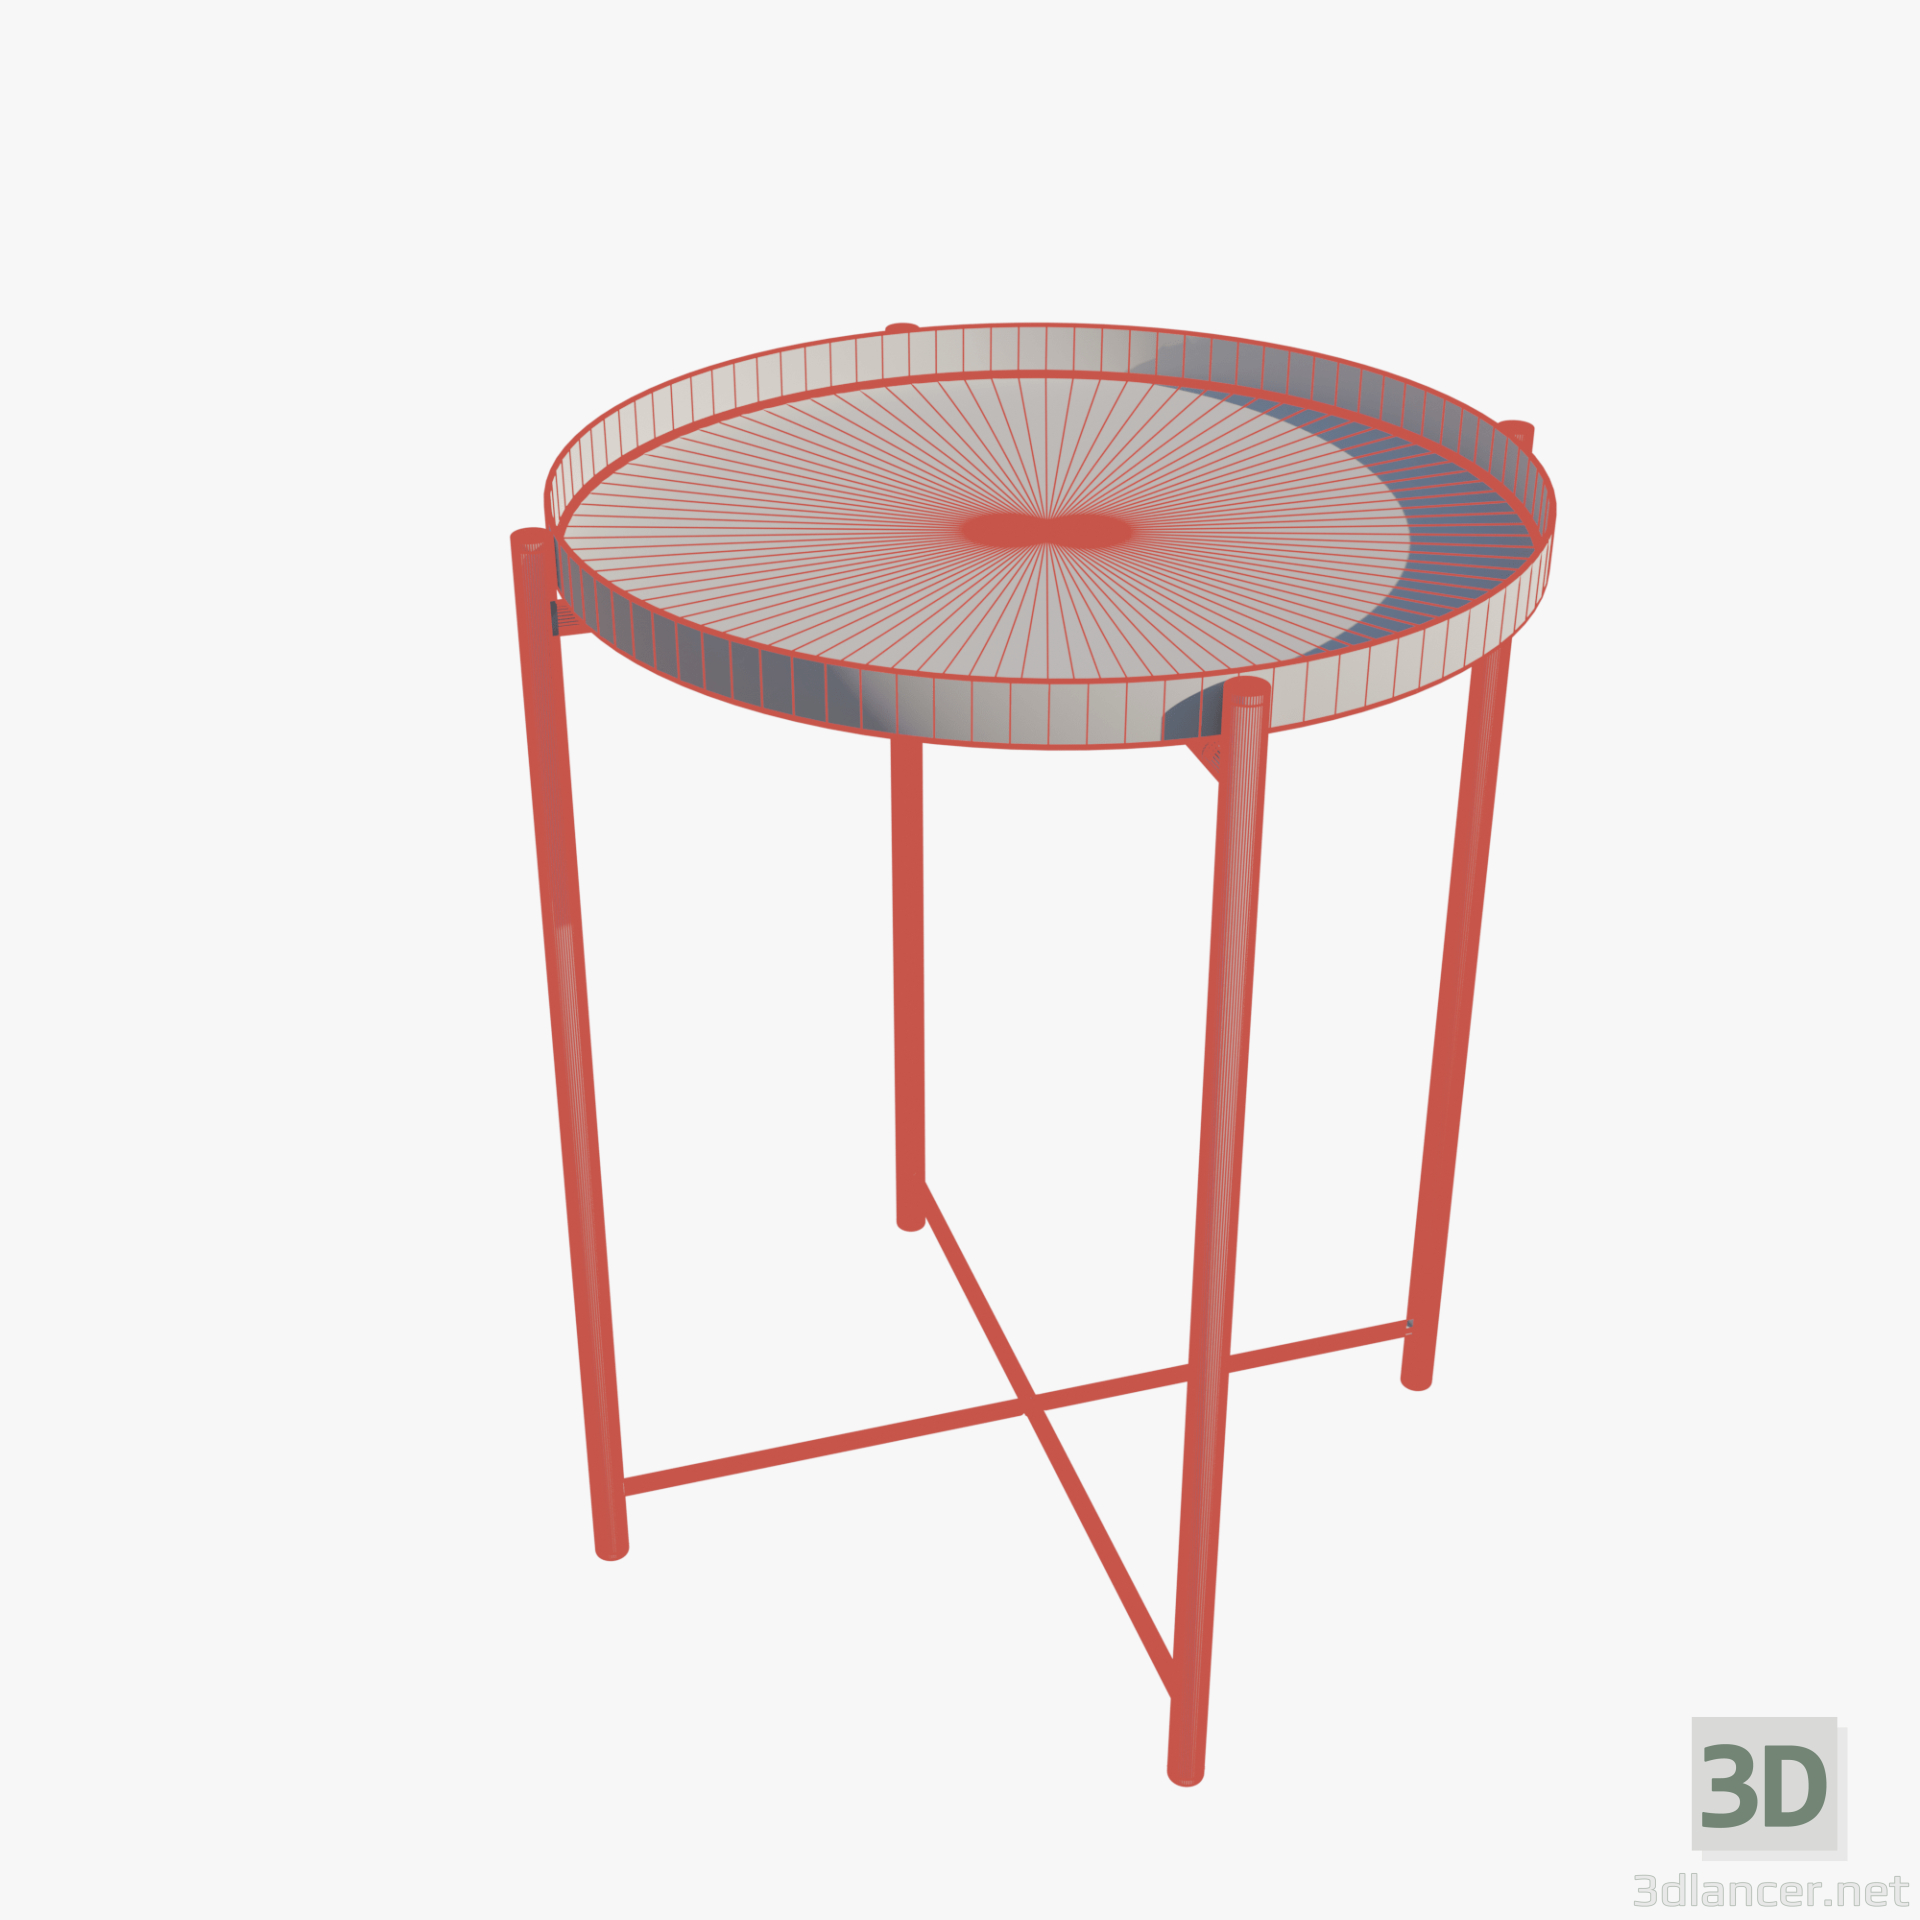 3D Gladom masa siyah IKEA modeli satın - render